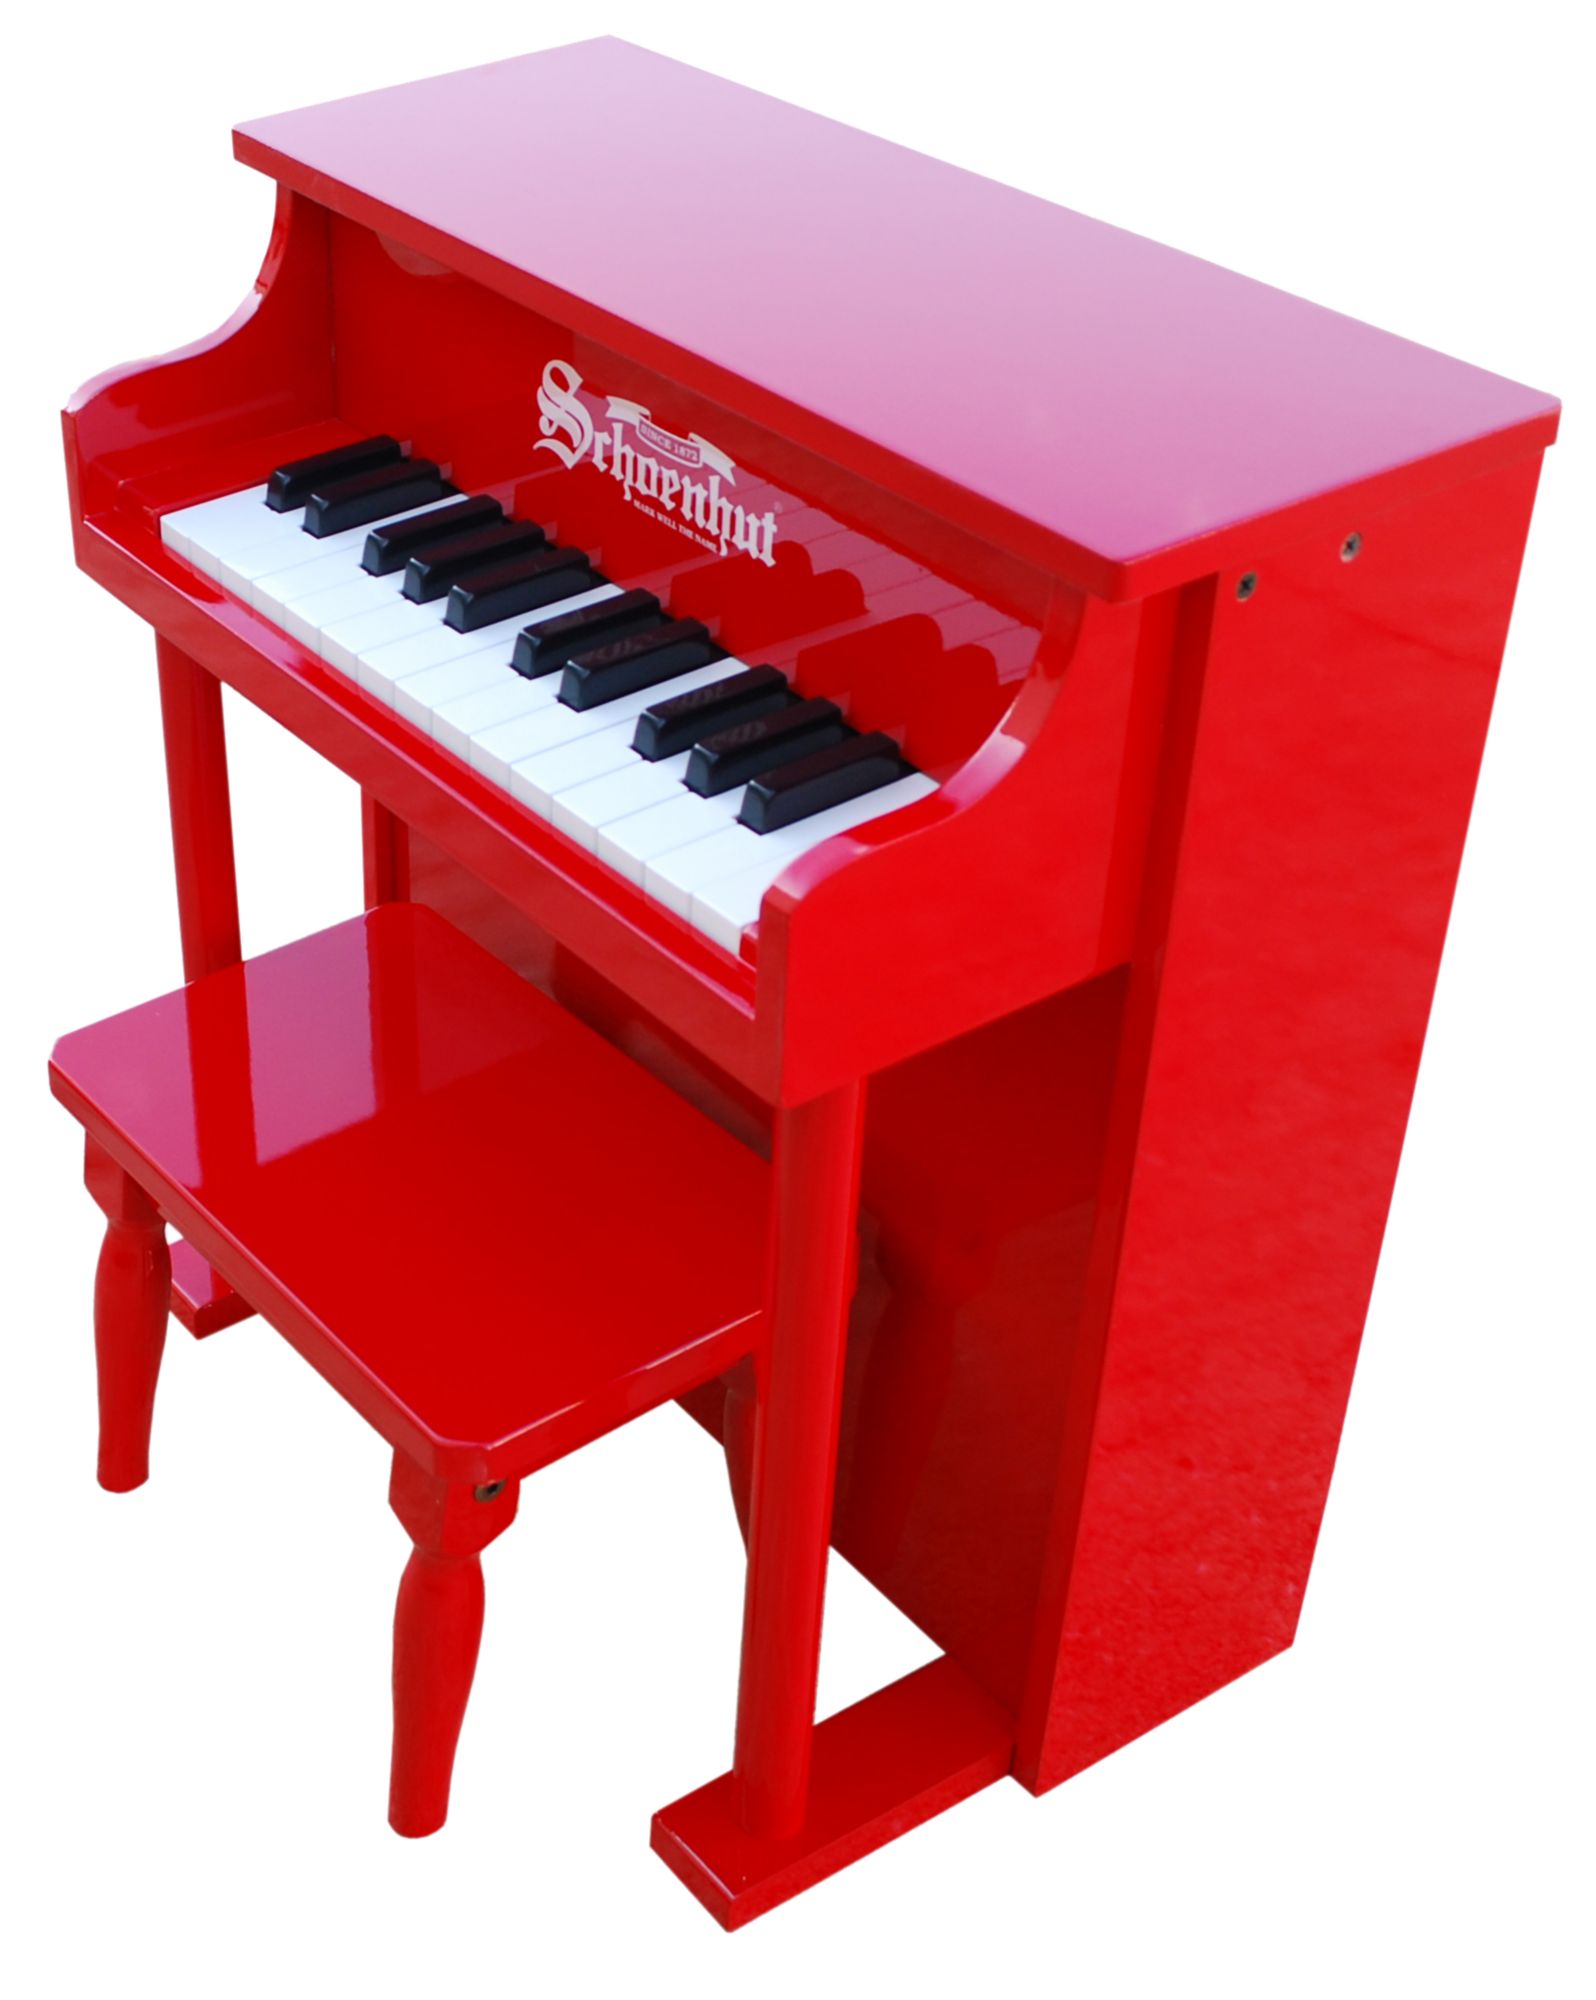 schoenhut upright piano